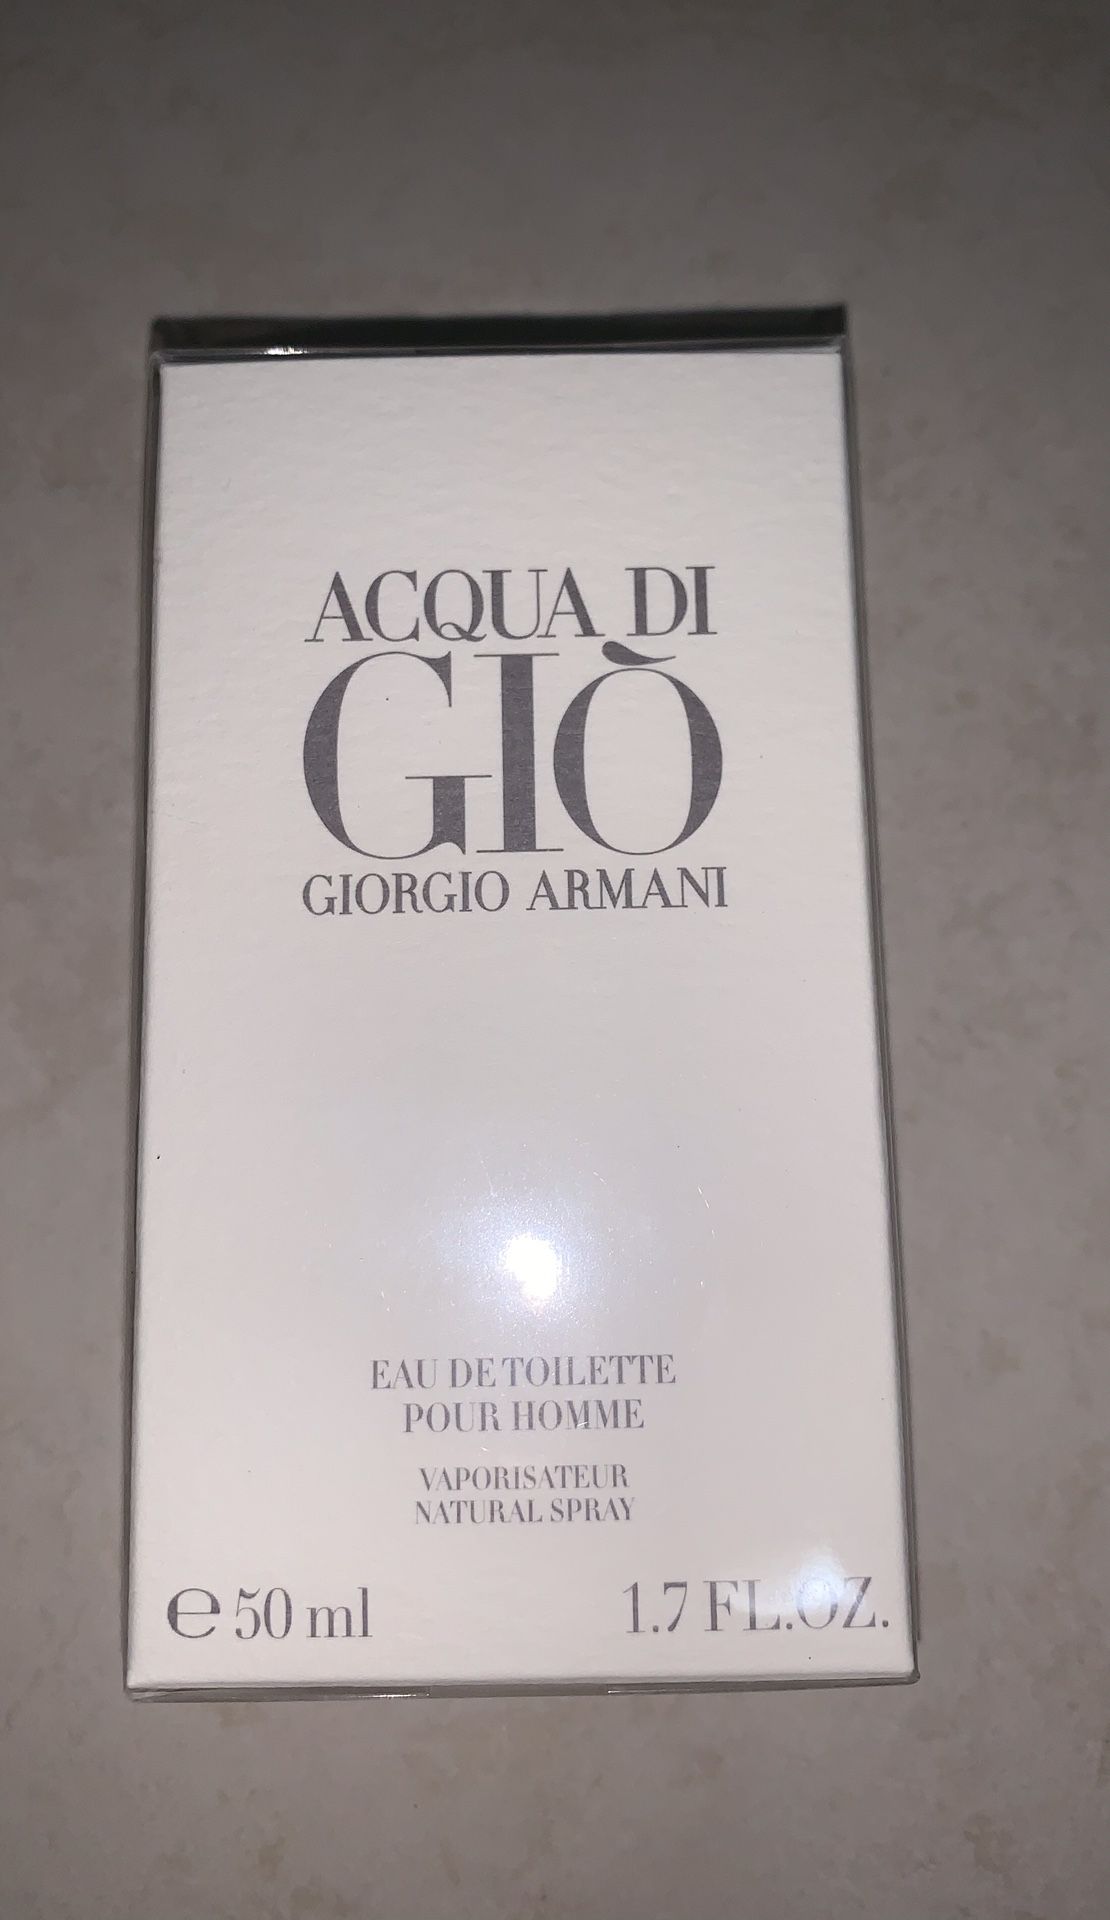 Giorgio Armani Gio man cologne 1.7 oz. reg $72. New sealed box authentic warranty from Macy’s. $58 firm